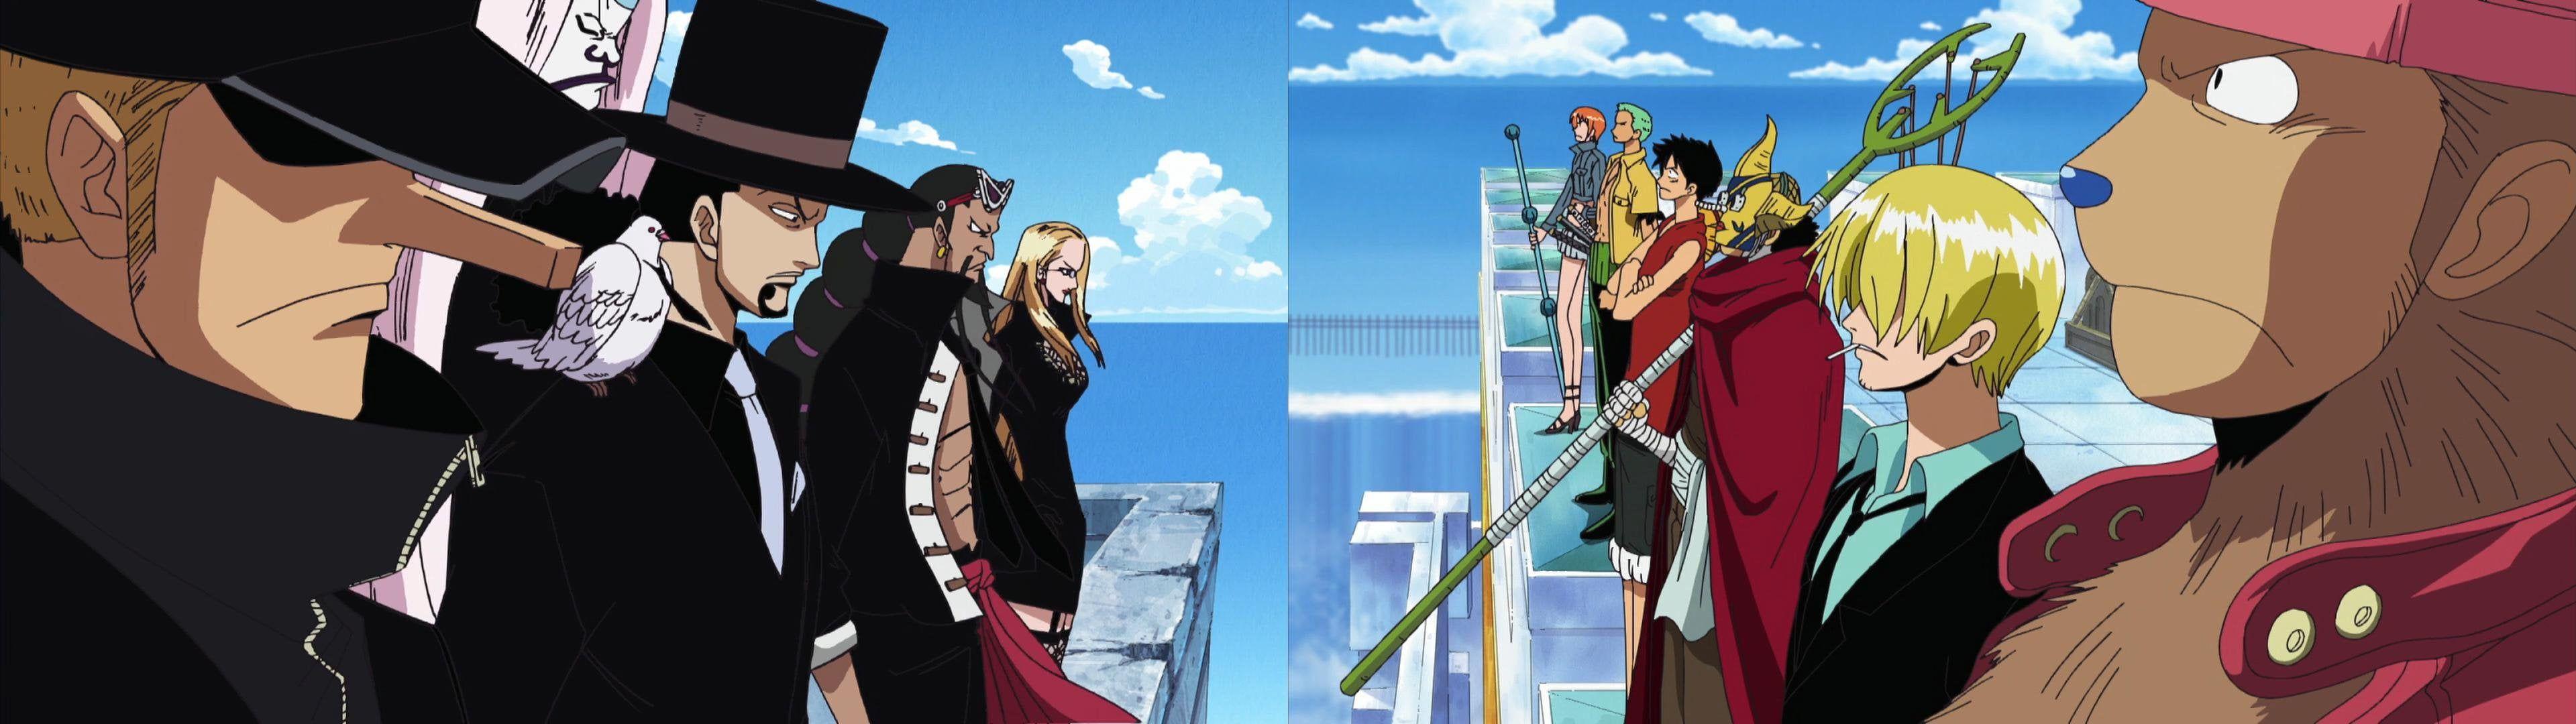 One Piece Dual Screen Wallpapers - Top Free One Piece Dual Screen